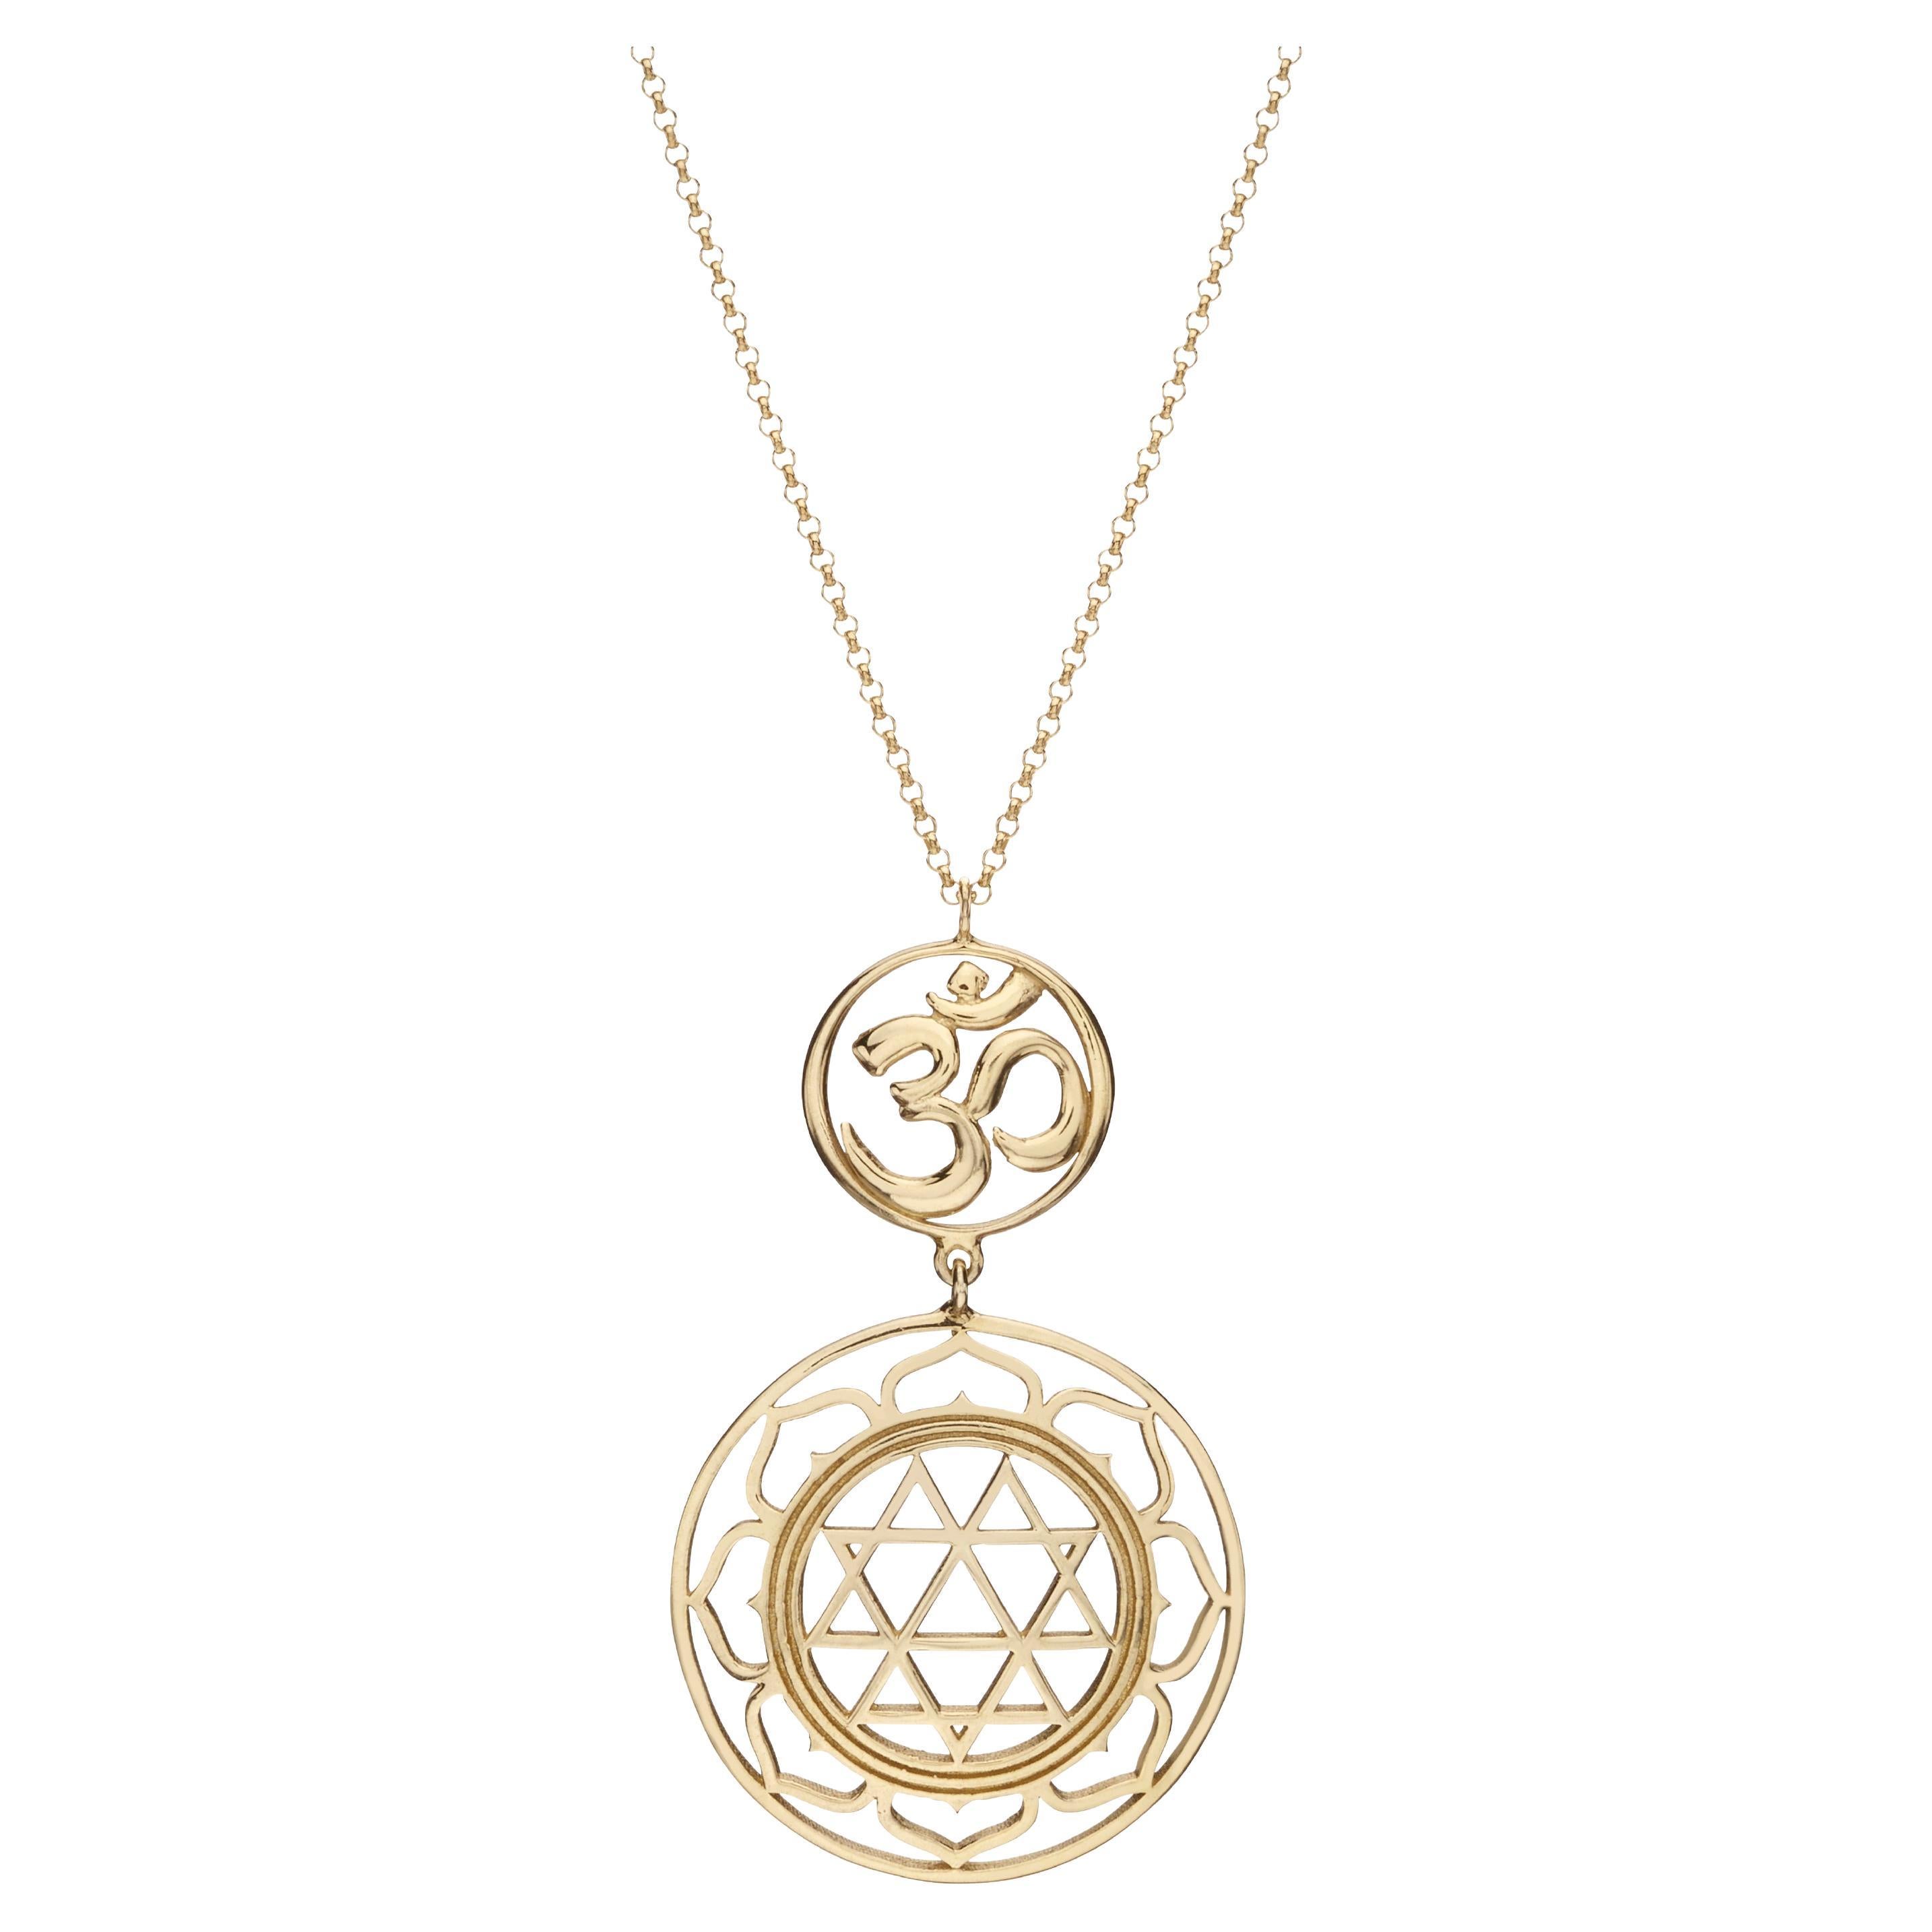 Spiritual "OM" Symbol Pendant Chain Necklace Handmade Solid 14K Yellow Gold